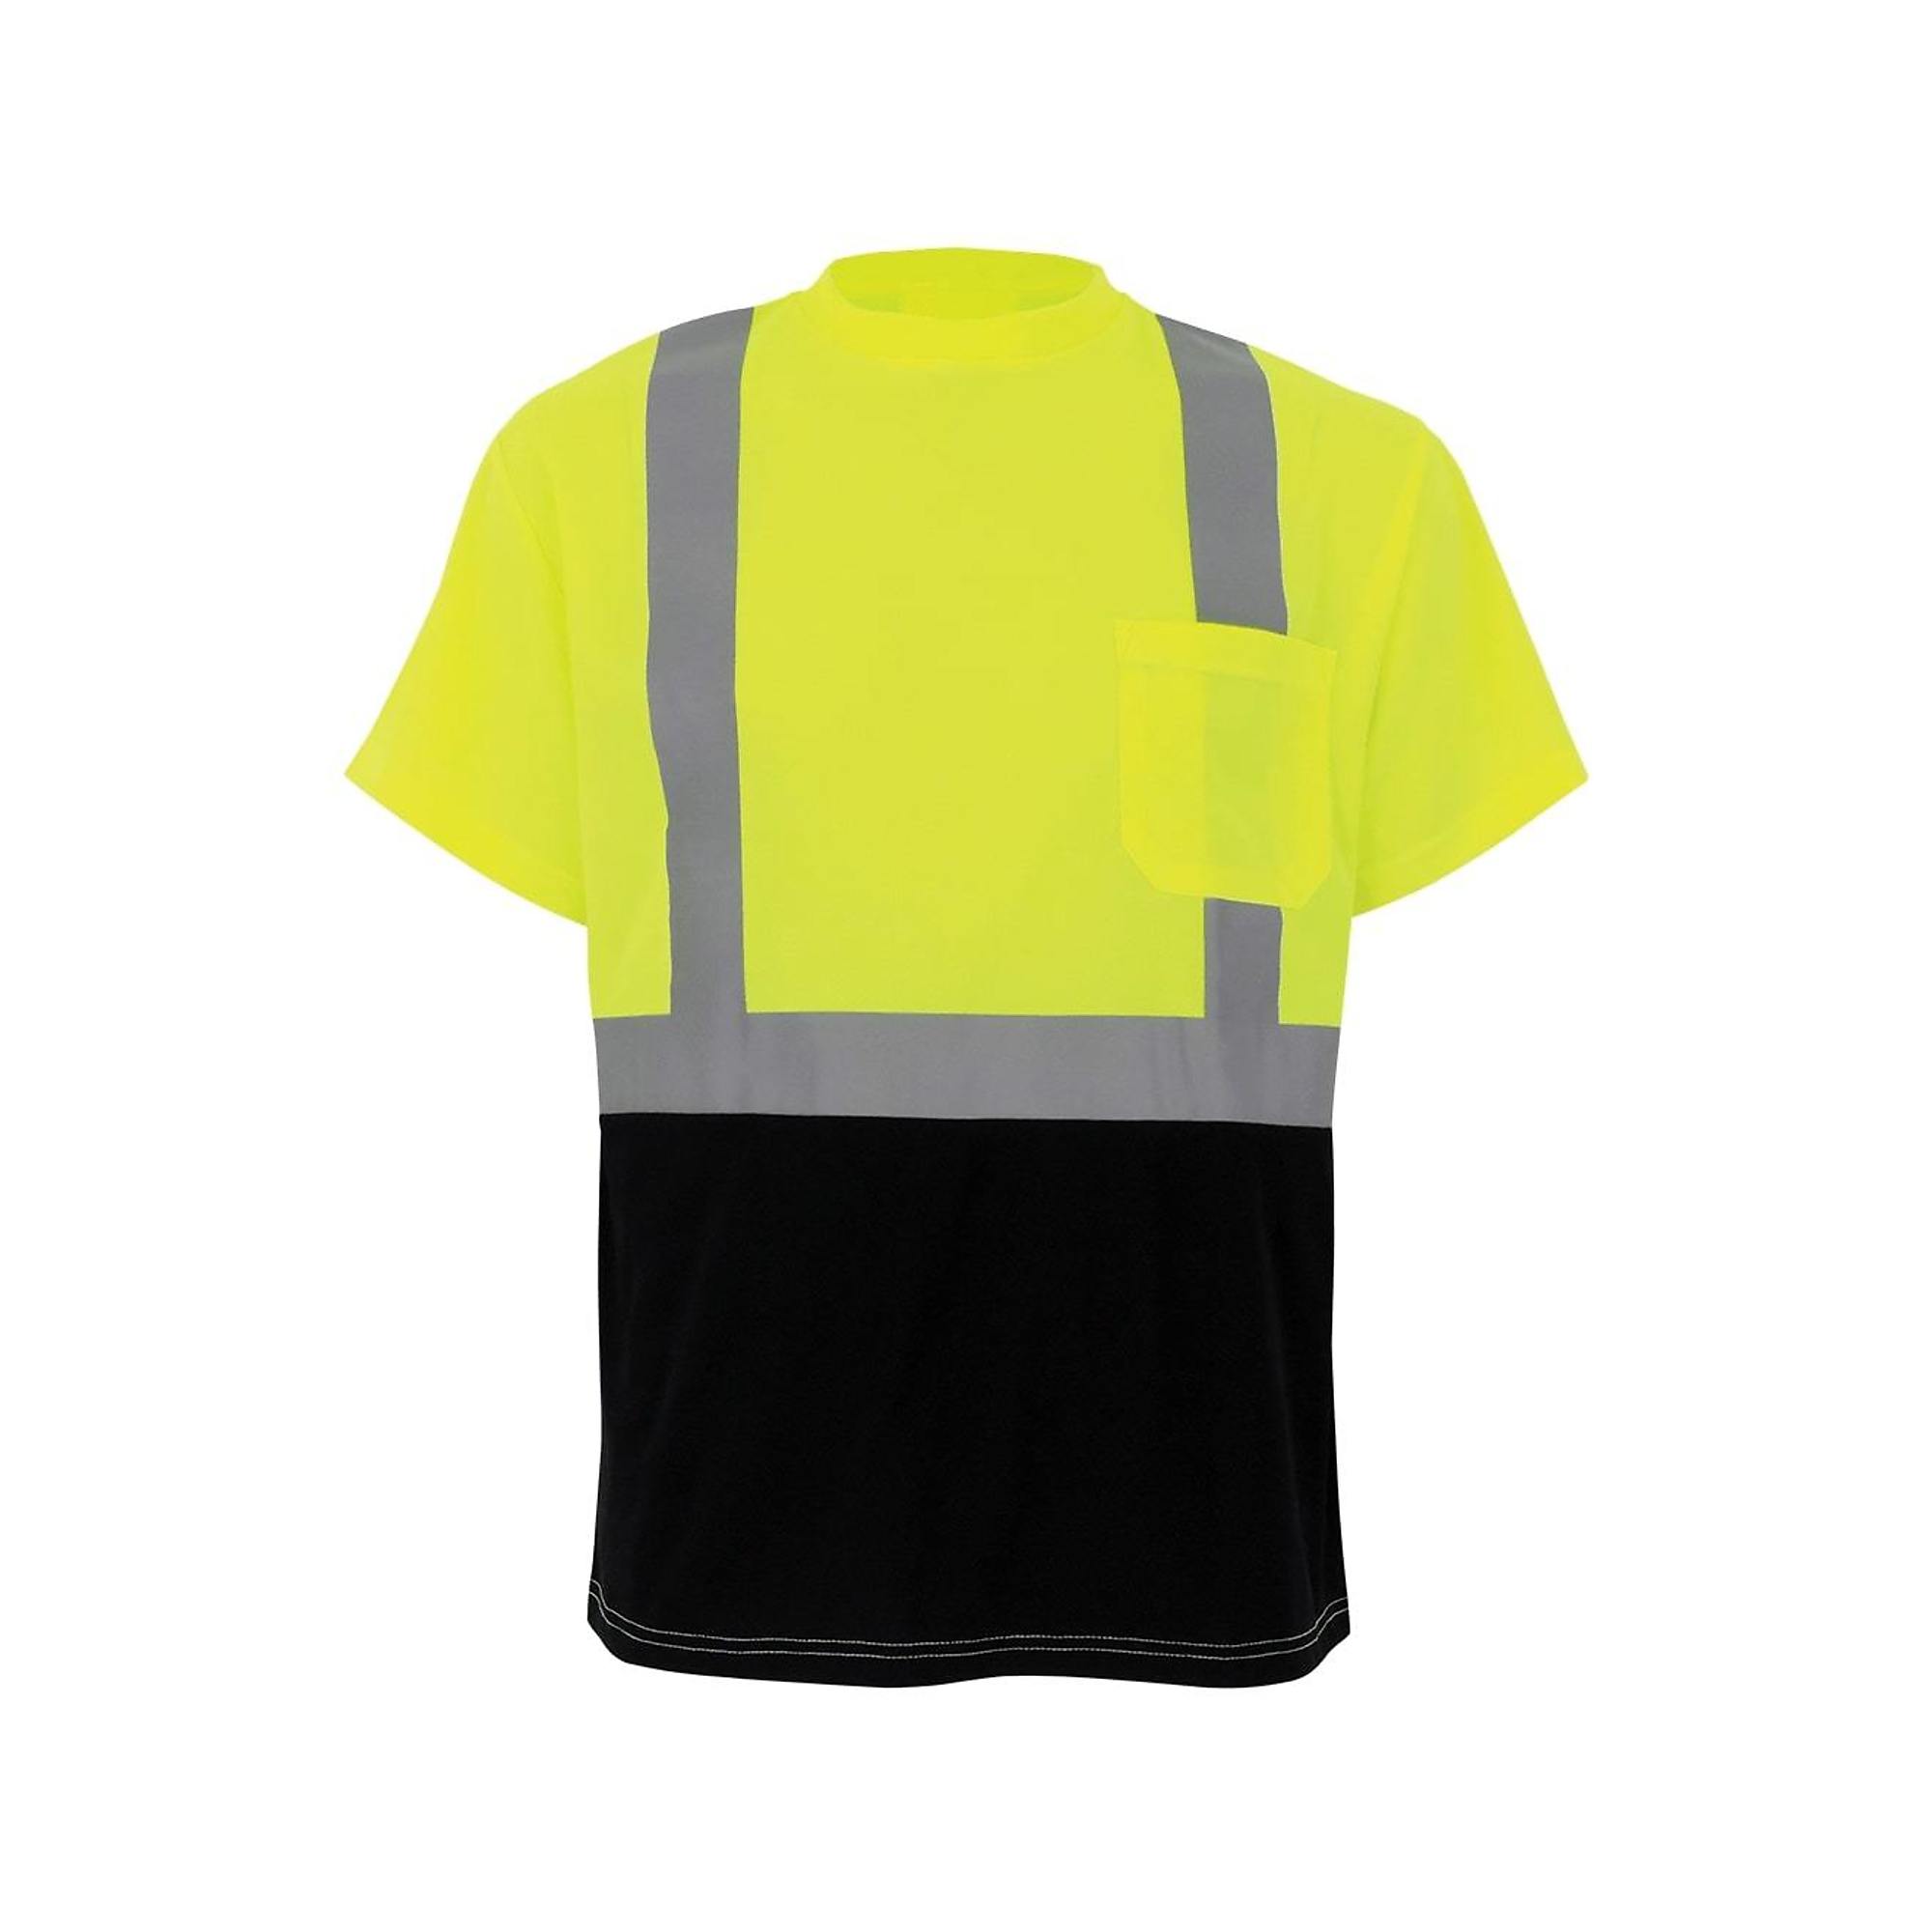 FrogWear, HV Yellow/Green, Class 2 Self-Wicking, Short-Sleeve Shirt, Size M, Model GLO-007B-M